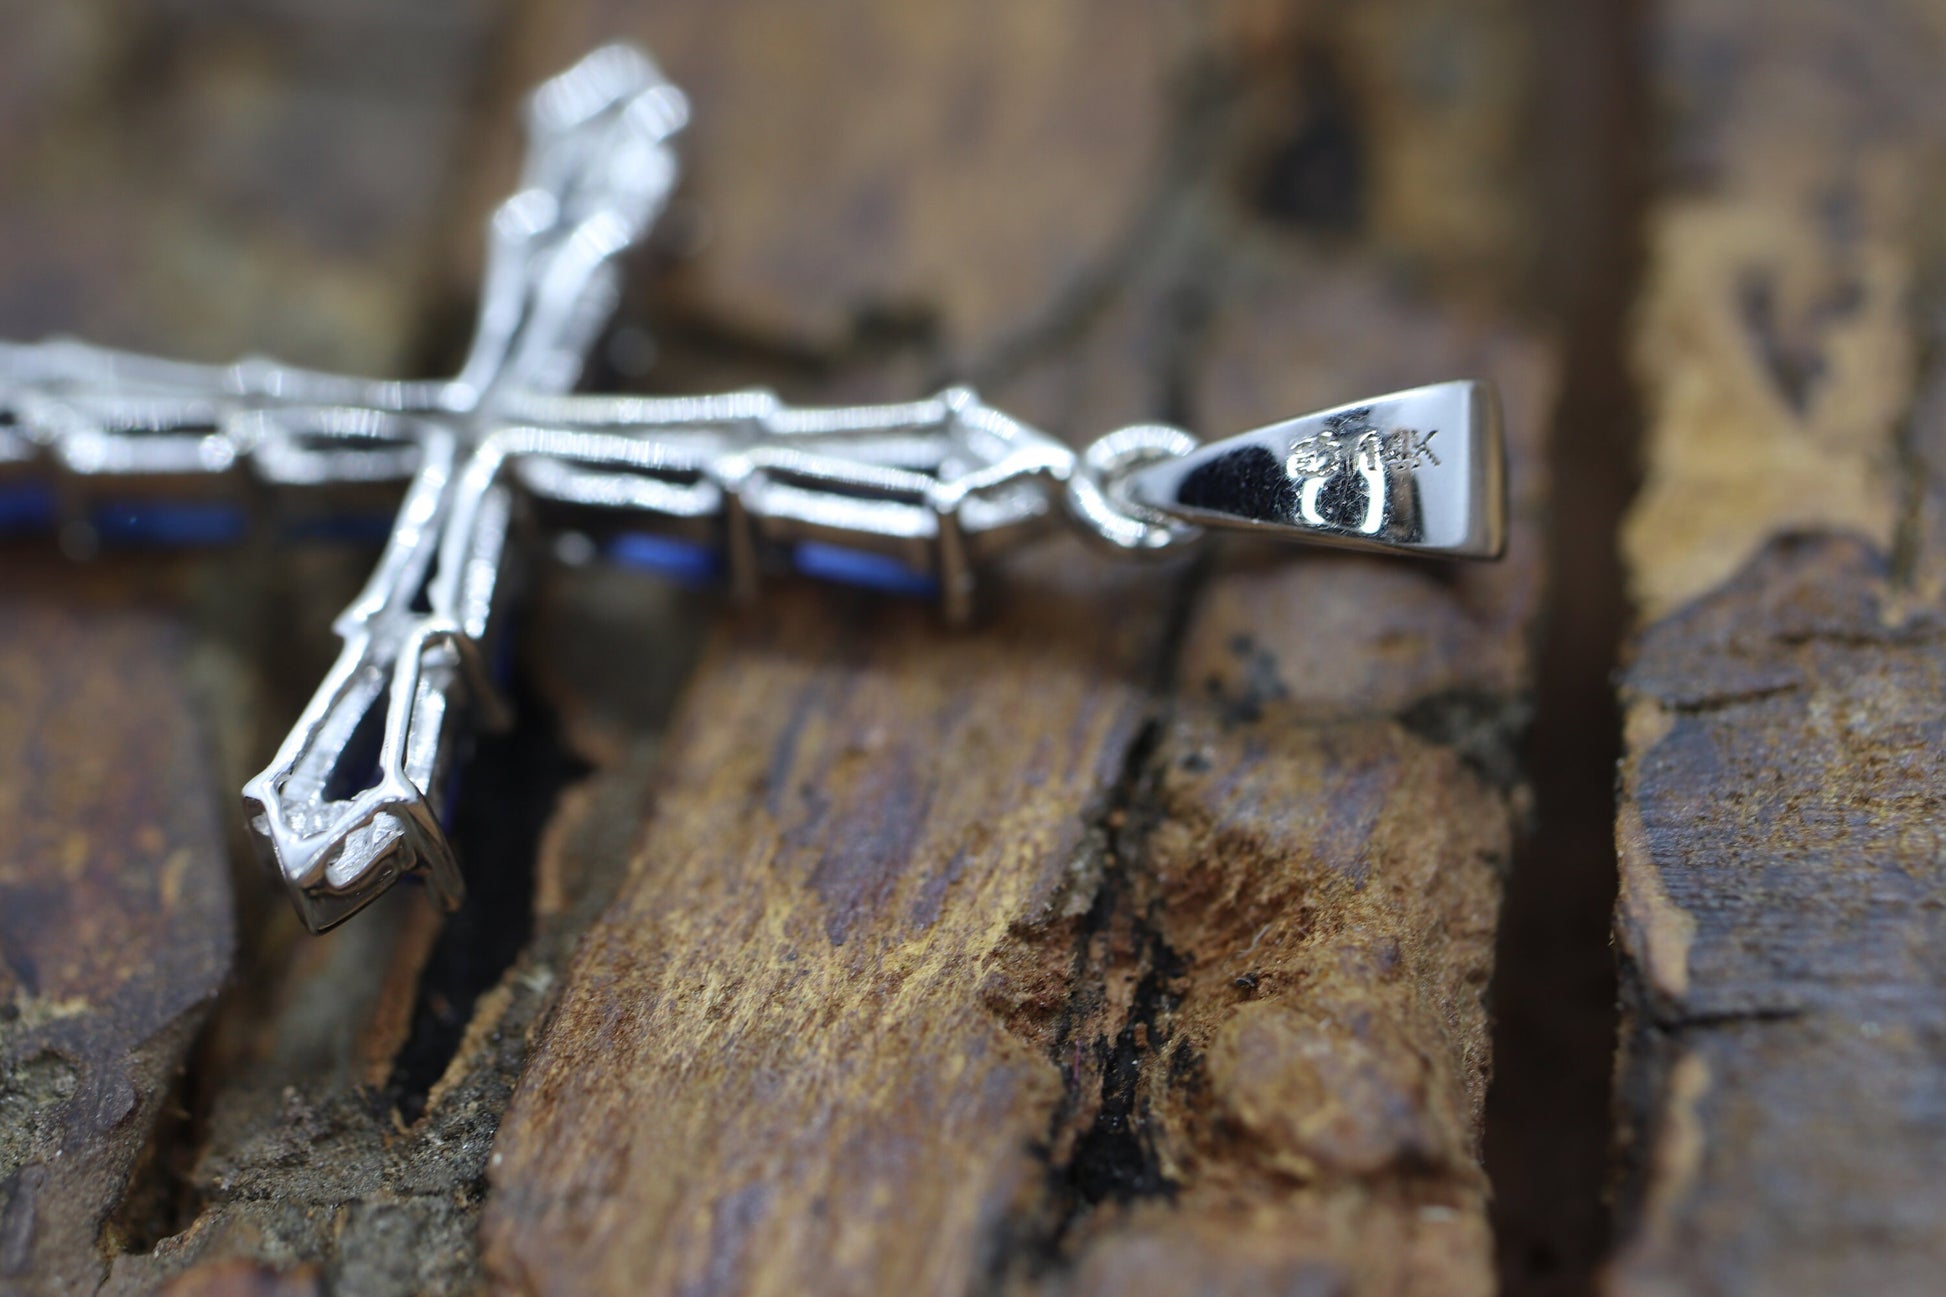 14k Sapphire and Diamond Cross Pendant. Crucifix Christian set baguette sapphires. st(115/11)